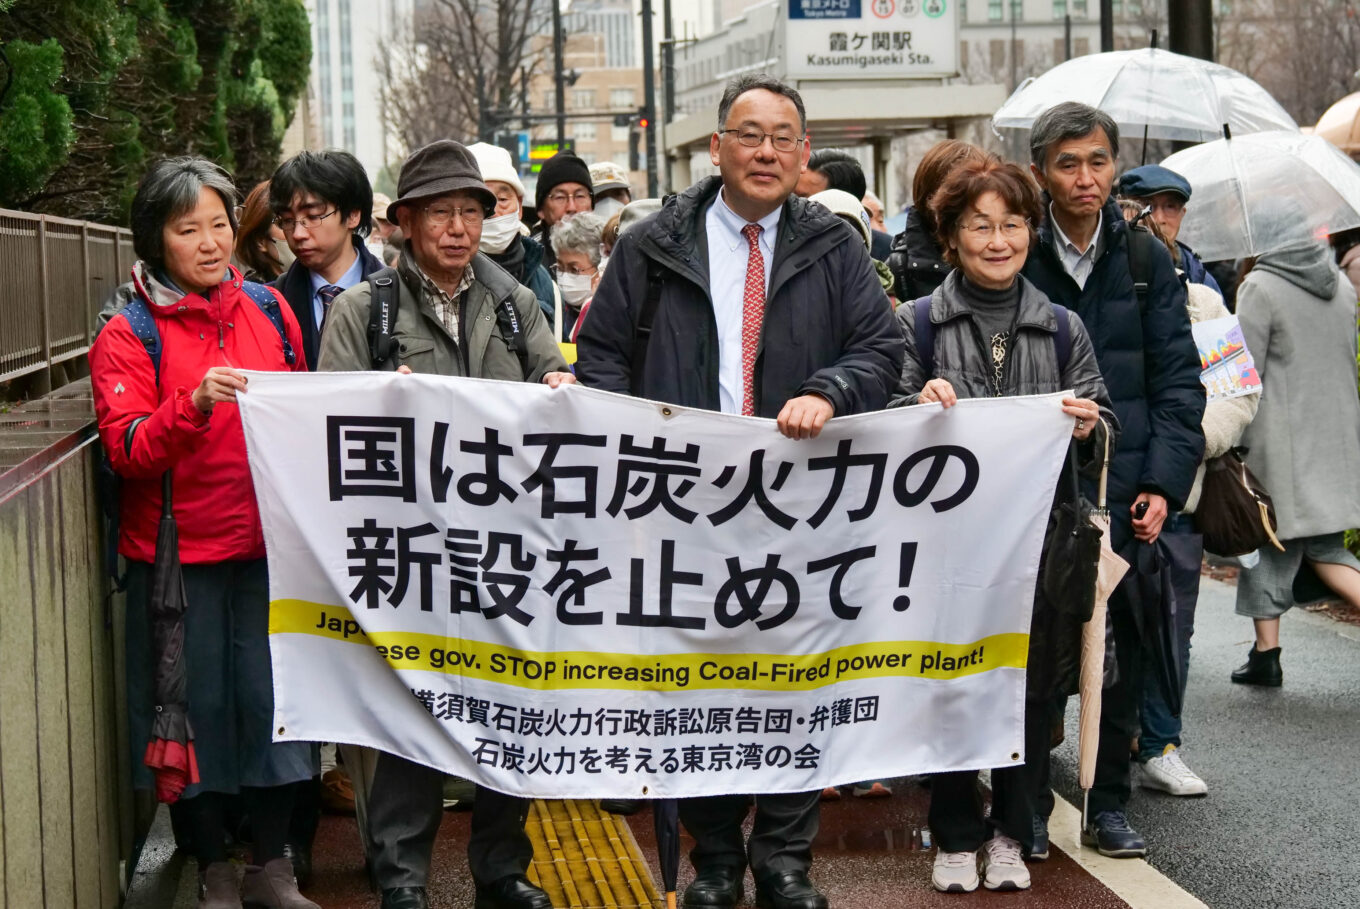 【News】 “Dismiss Appeal” in Yokosuka Coal Fired Power Administrative Lawsuit